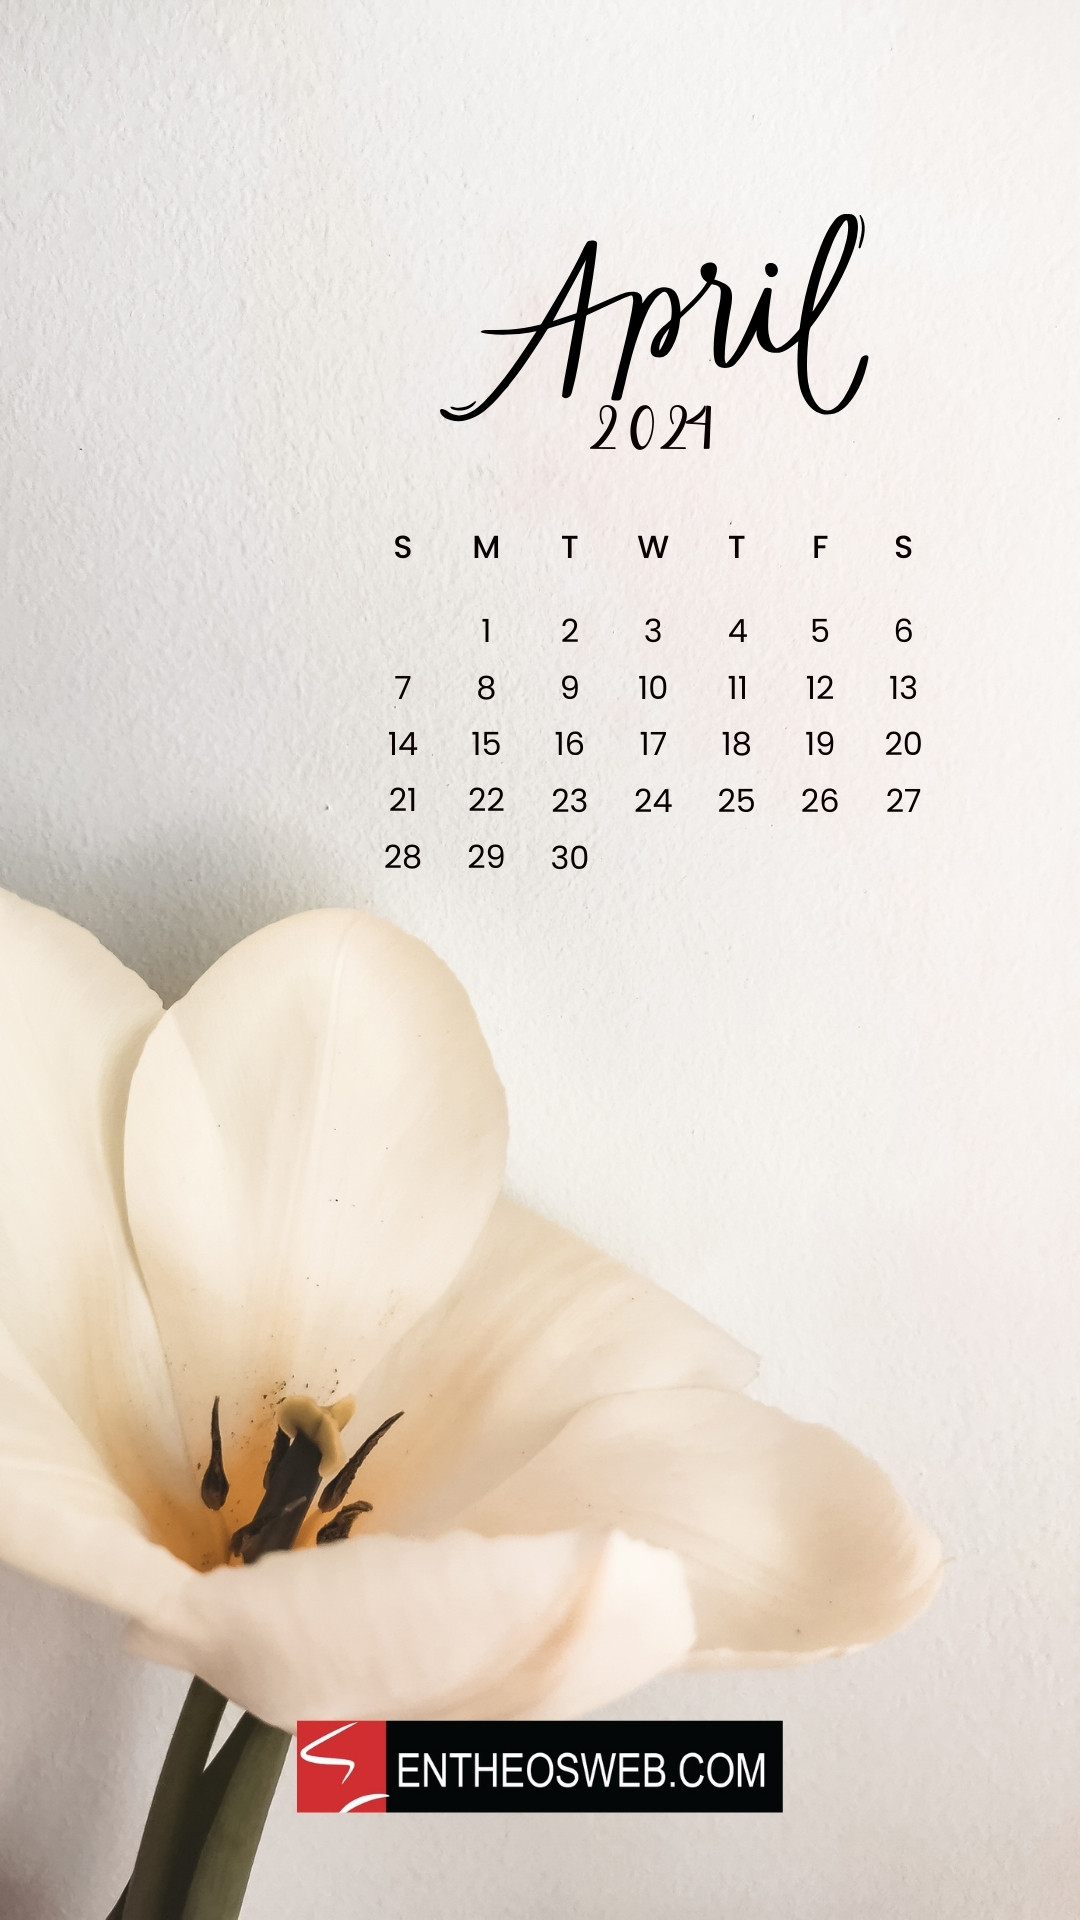 April 2024 Calendar Phone Wallpaper Backgrounds | Entheosweb with regard to April Calendar Wallpaper 2024